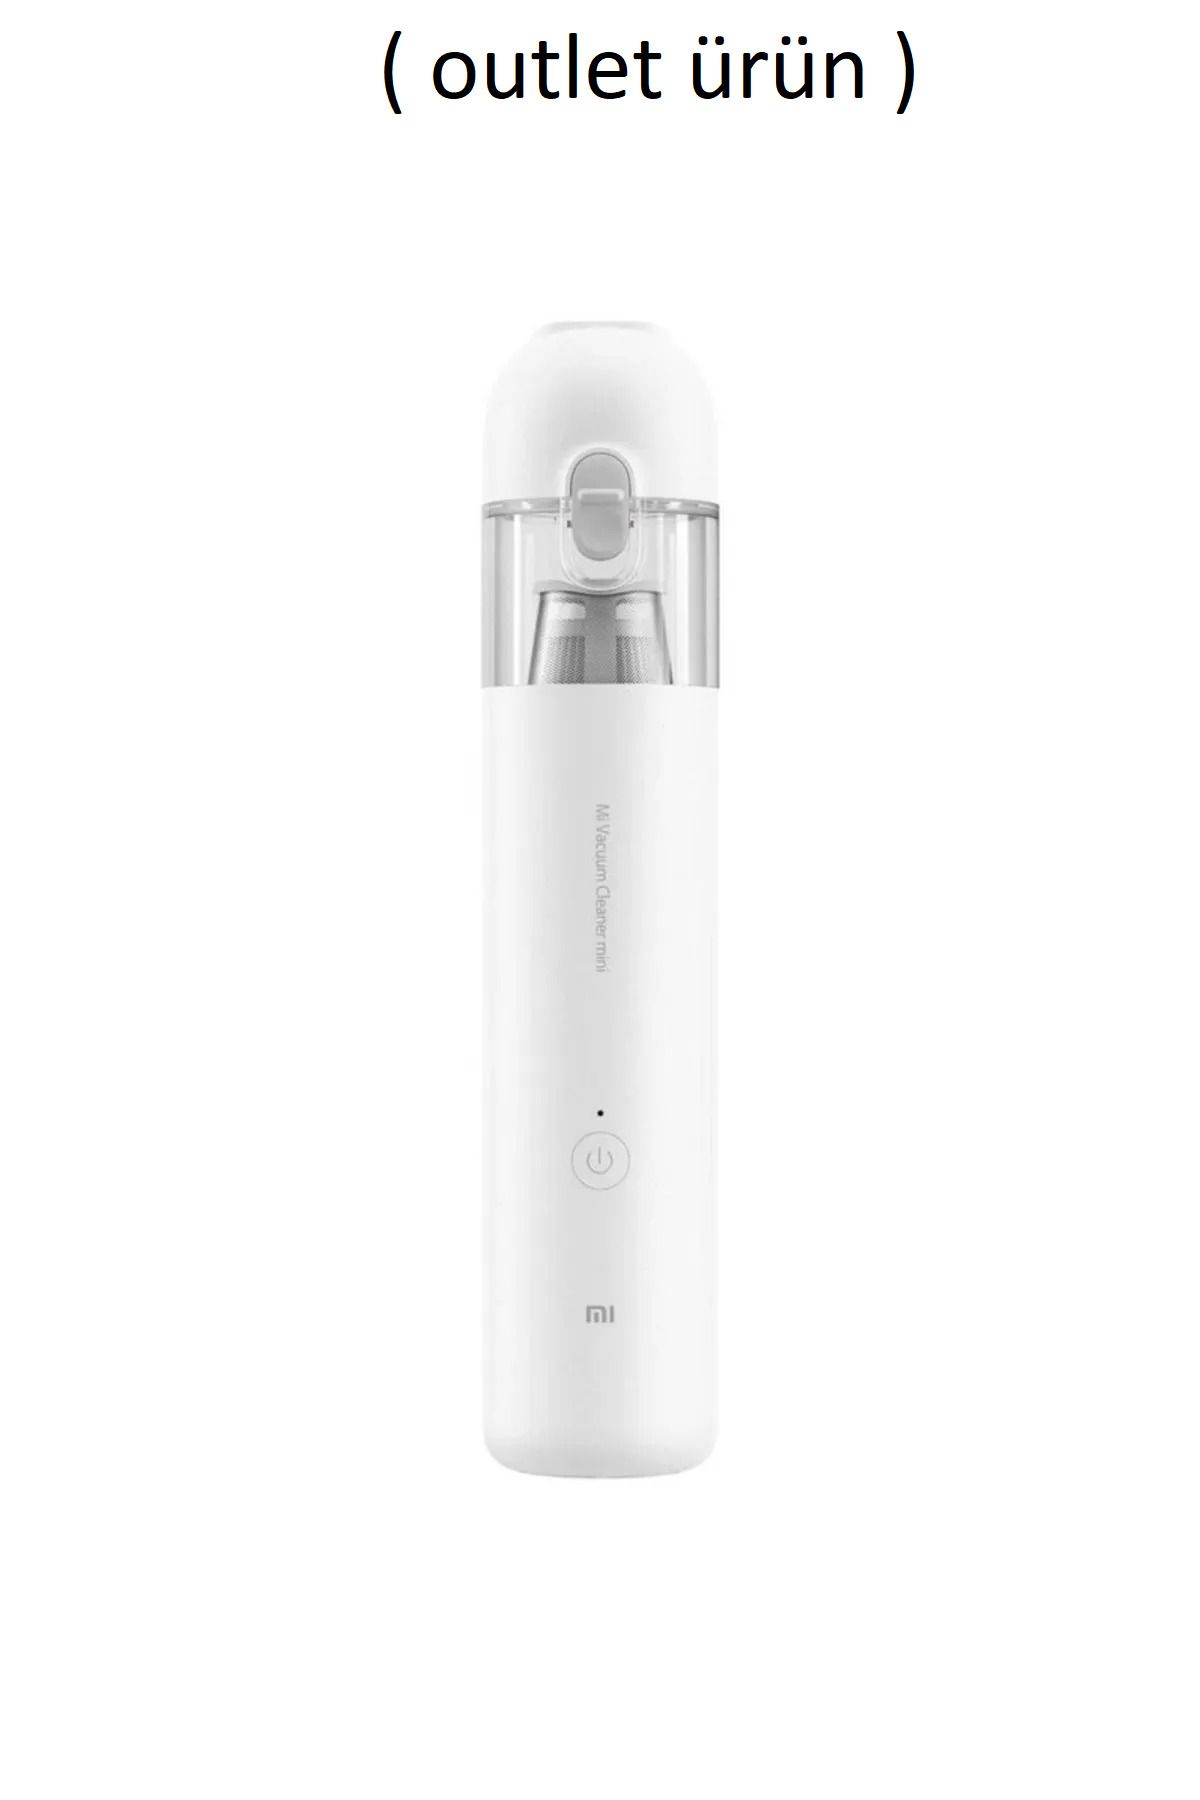 Xiaomi Mi Vacuum Cleaner (eu)  Mini Şarjlı El Süpürgesi ( Outlet Ürün )